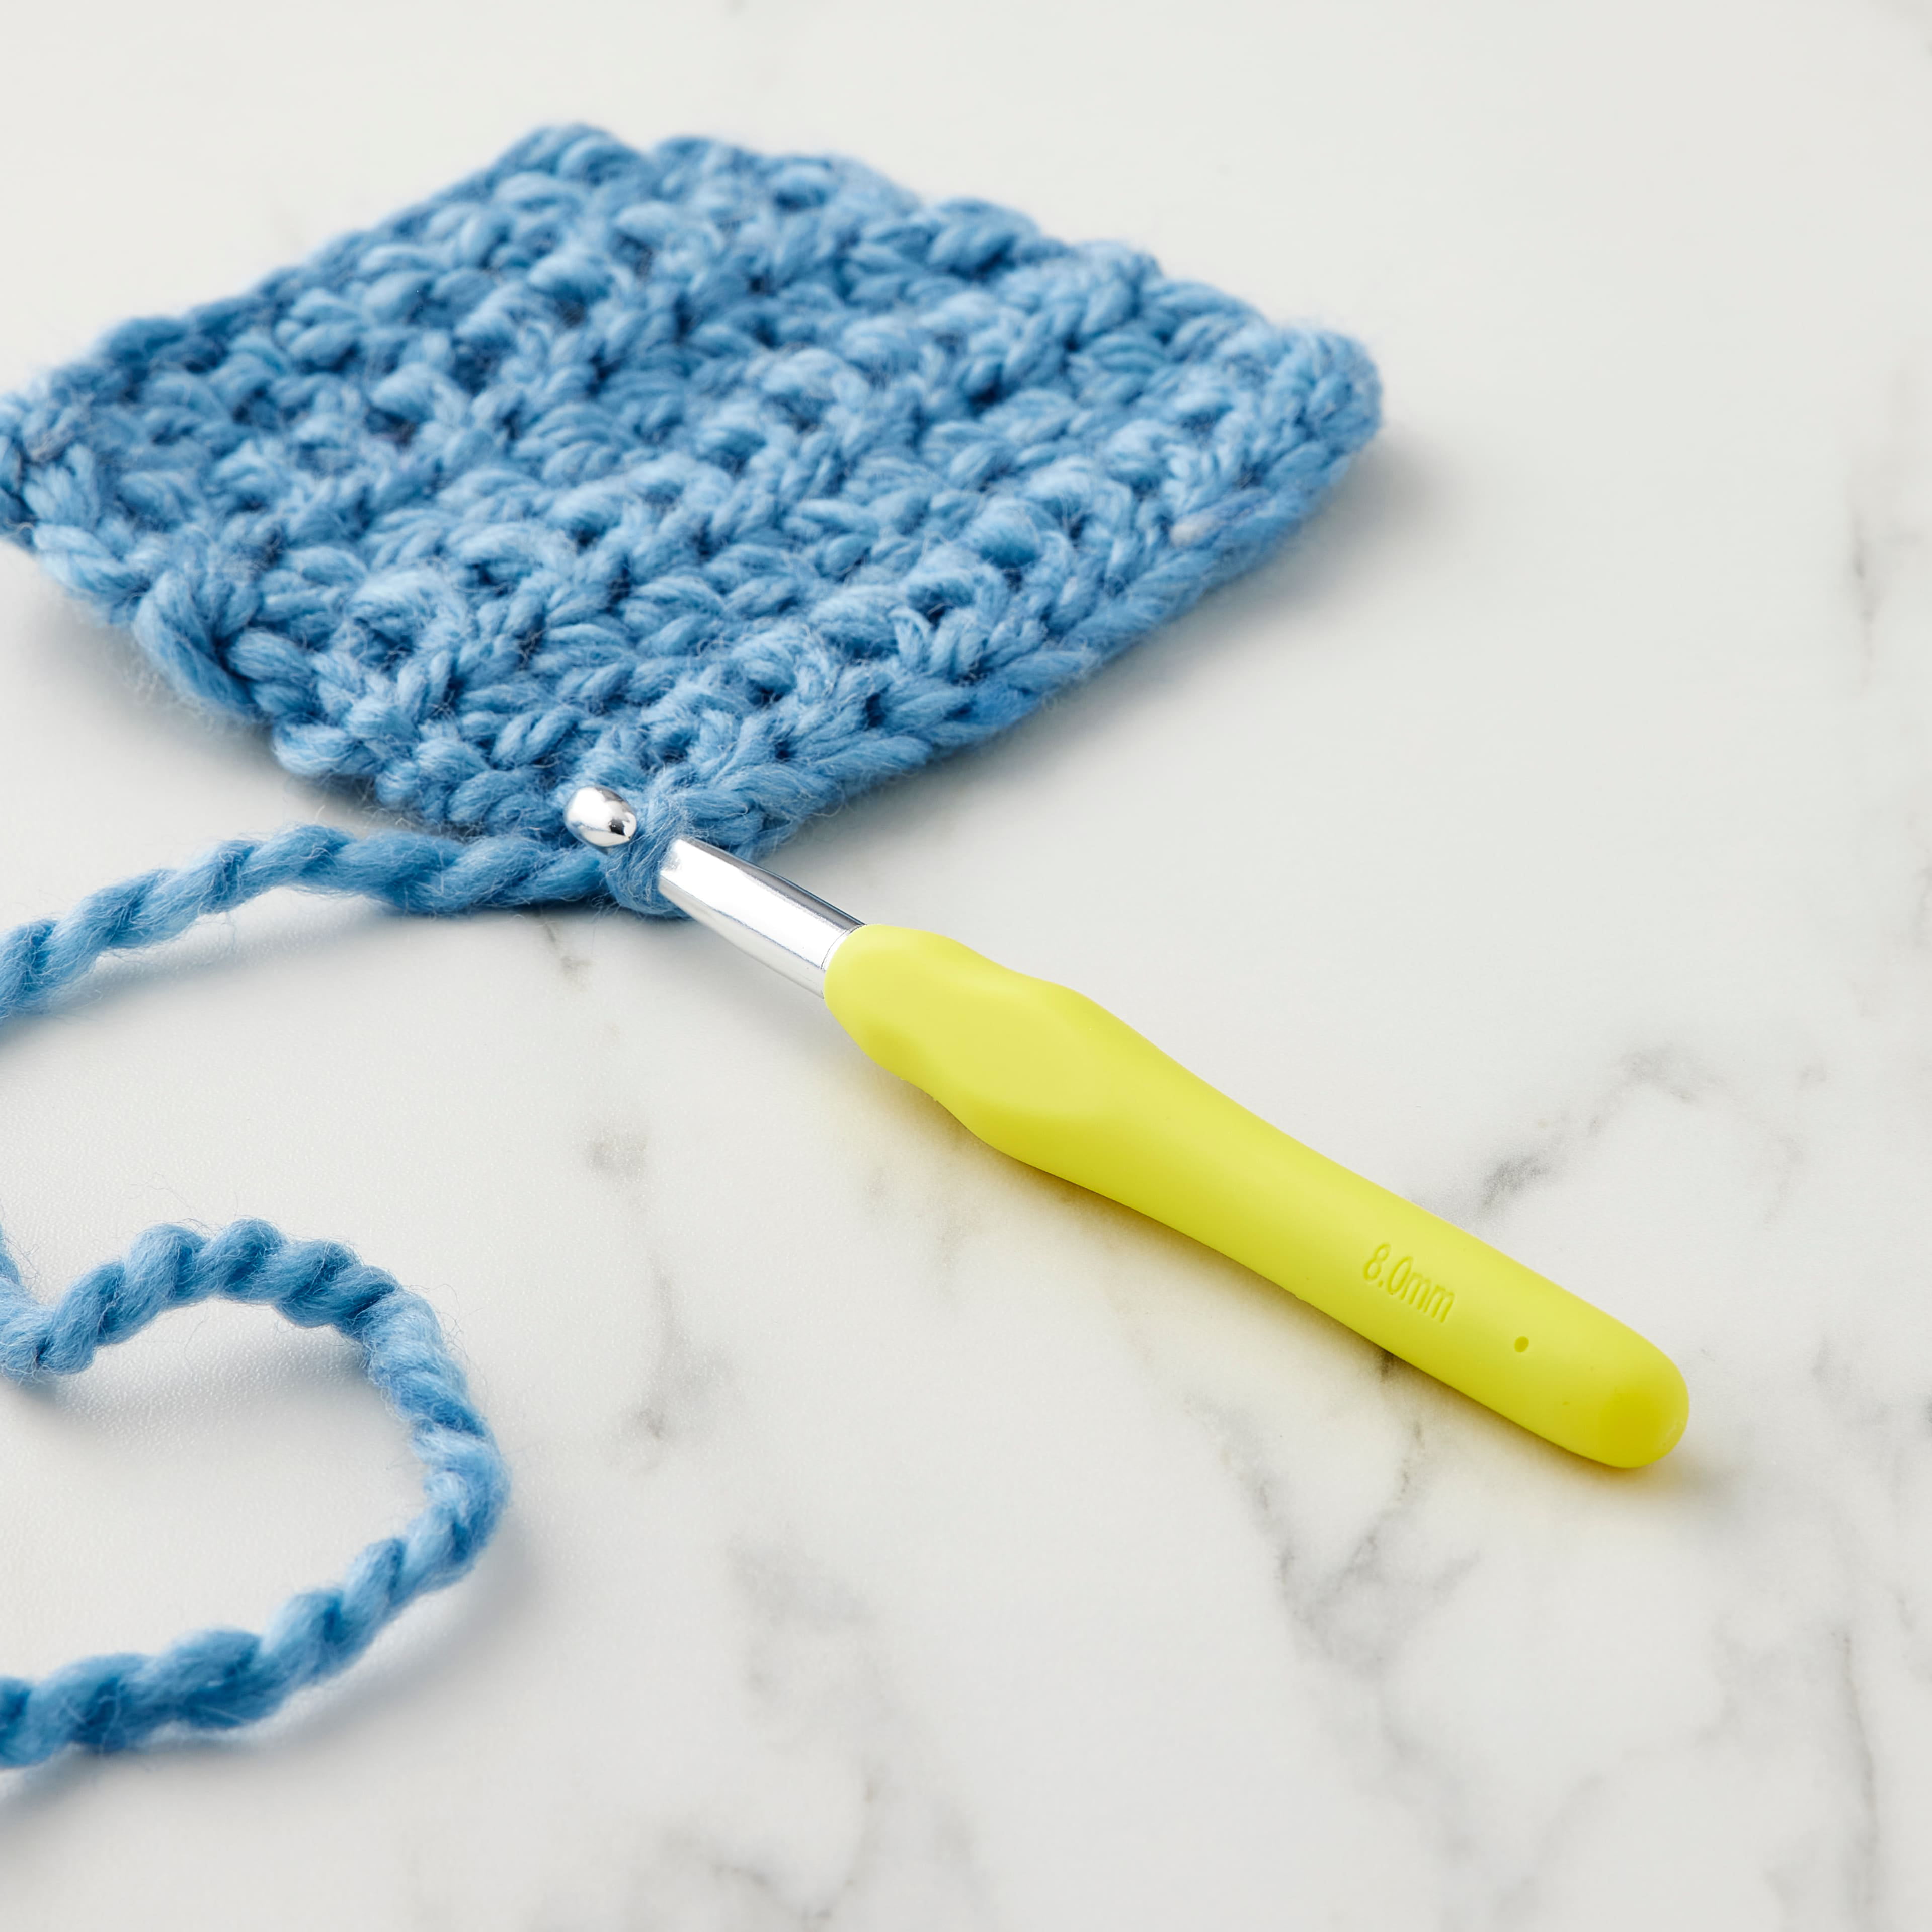 Ergonomic Aluminum Crochet Hook by Loops & Threads - I / 5.5 mm Ergonomic  Grip Handles for Arthritic Hands - 1 Pack 